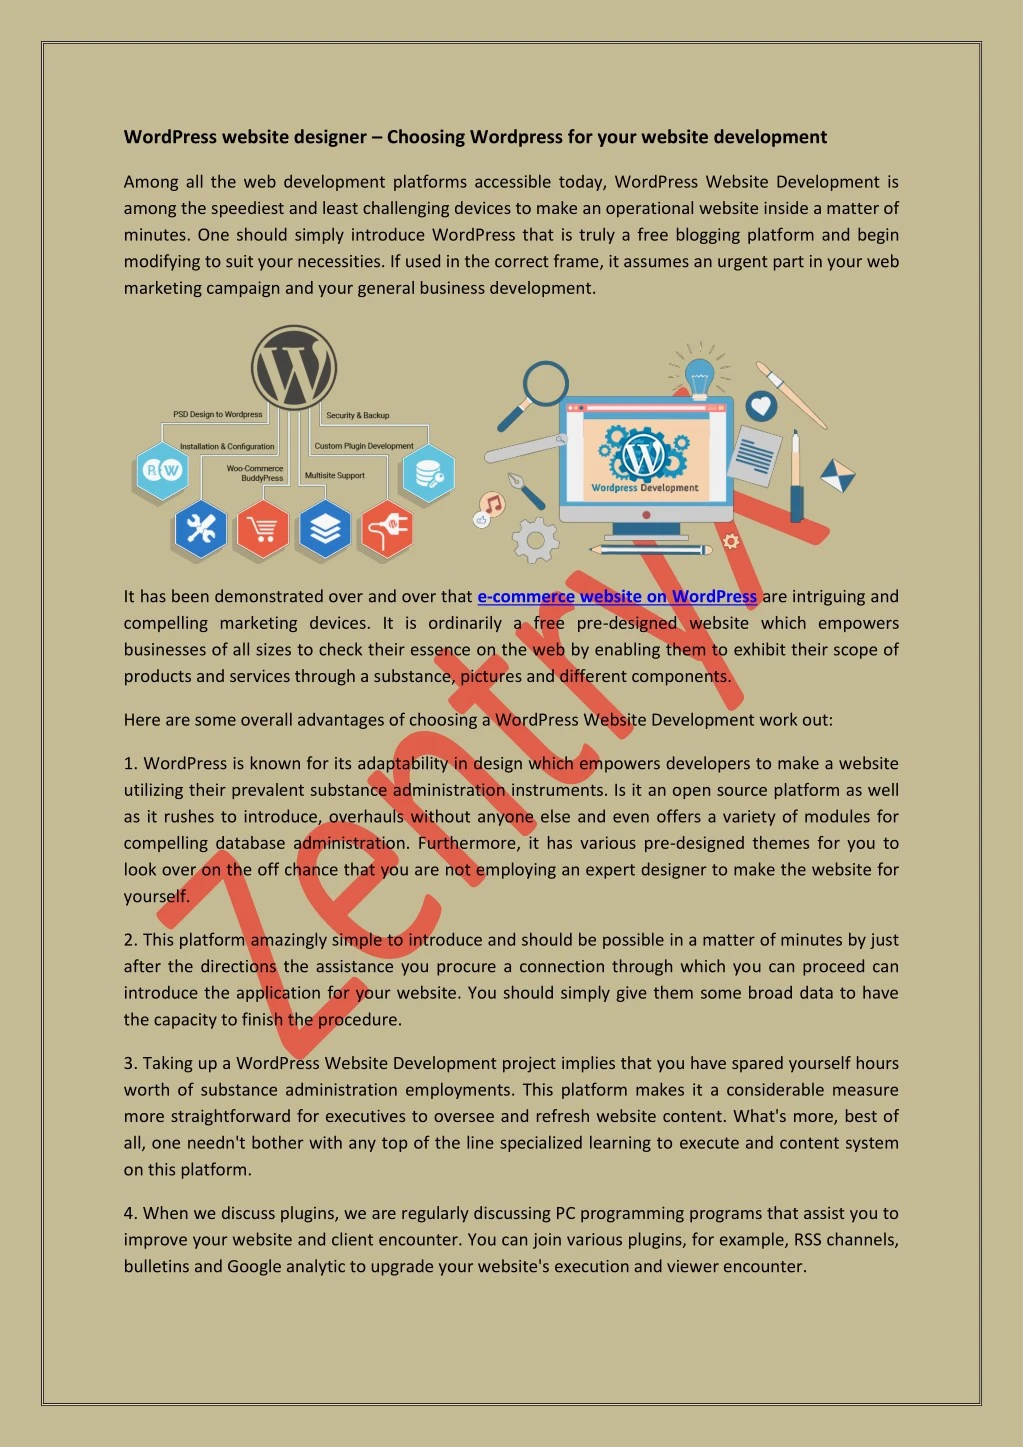 wordpress website designer choosing wordpress